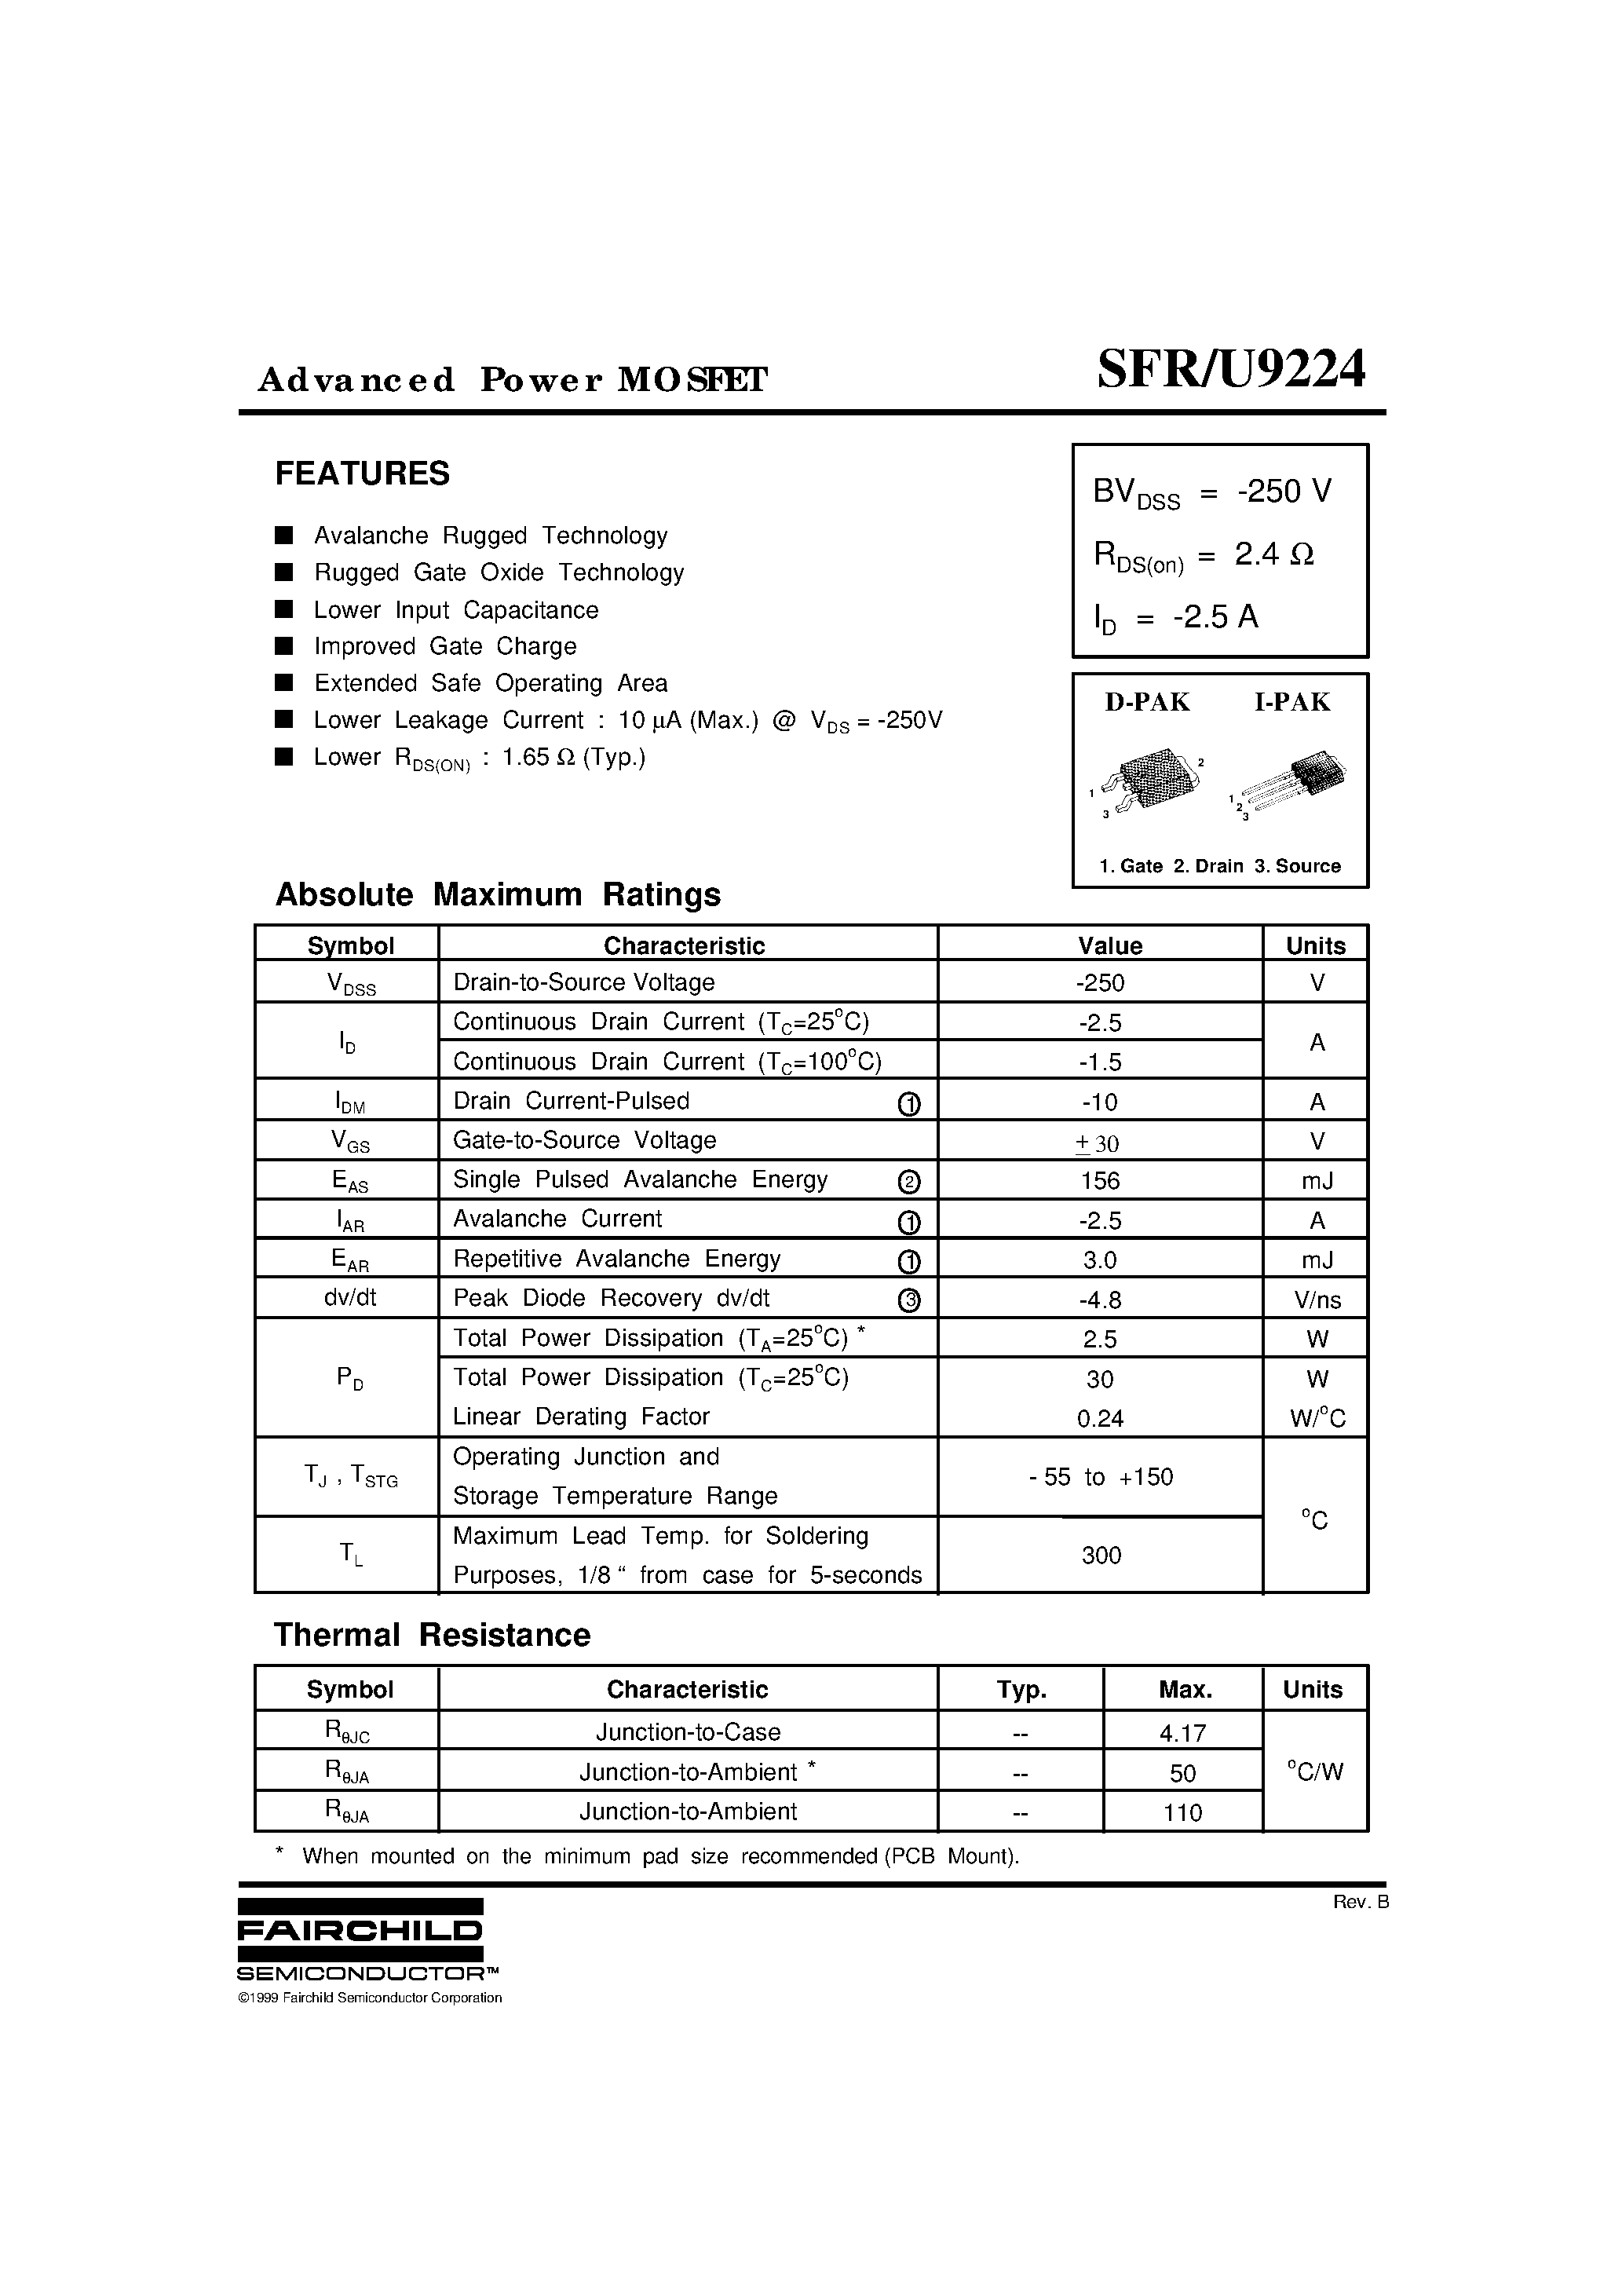 Даташит SFR9224 - Advanced Power MOSFET страница 1